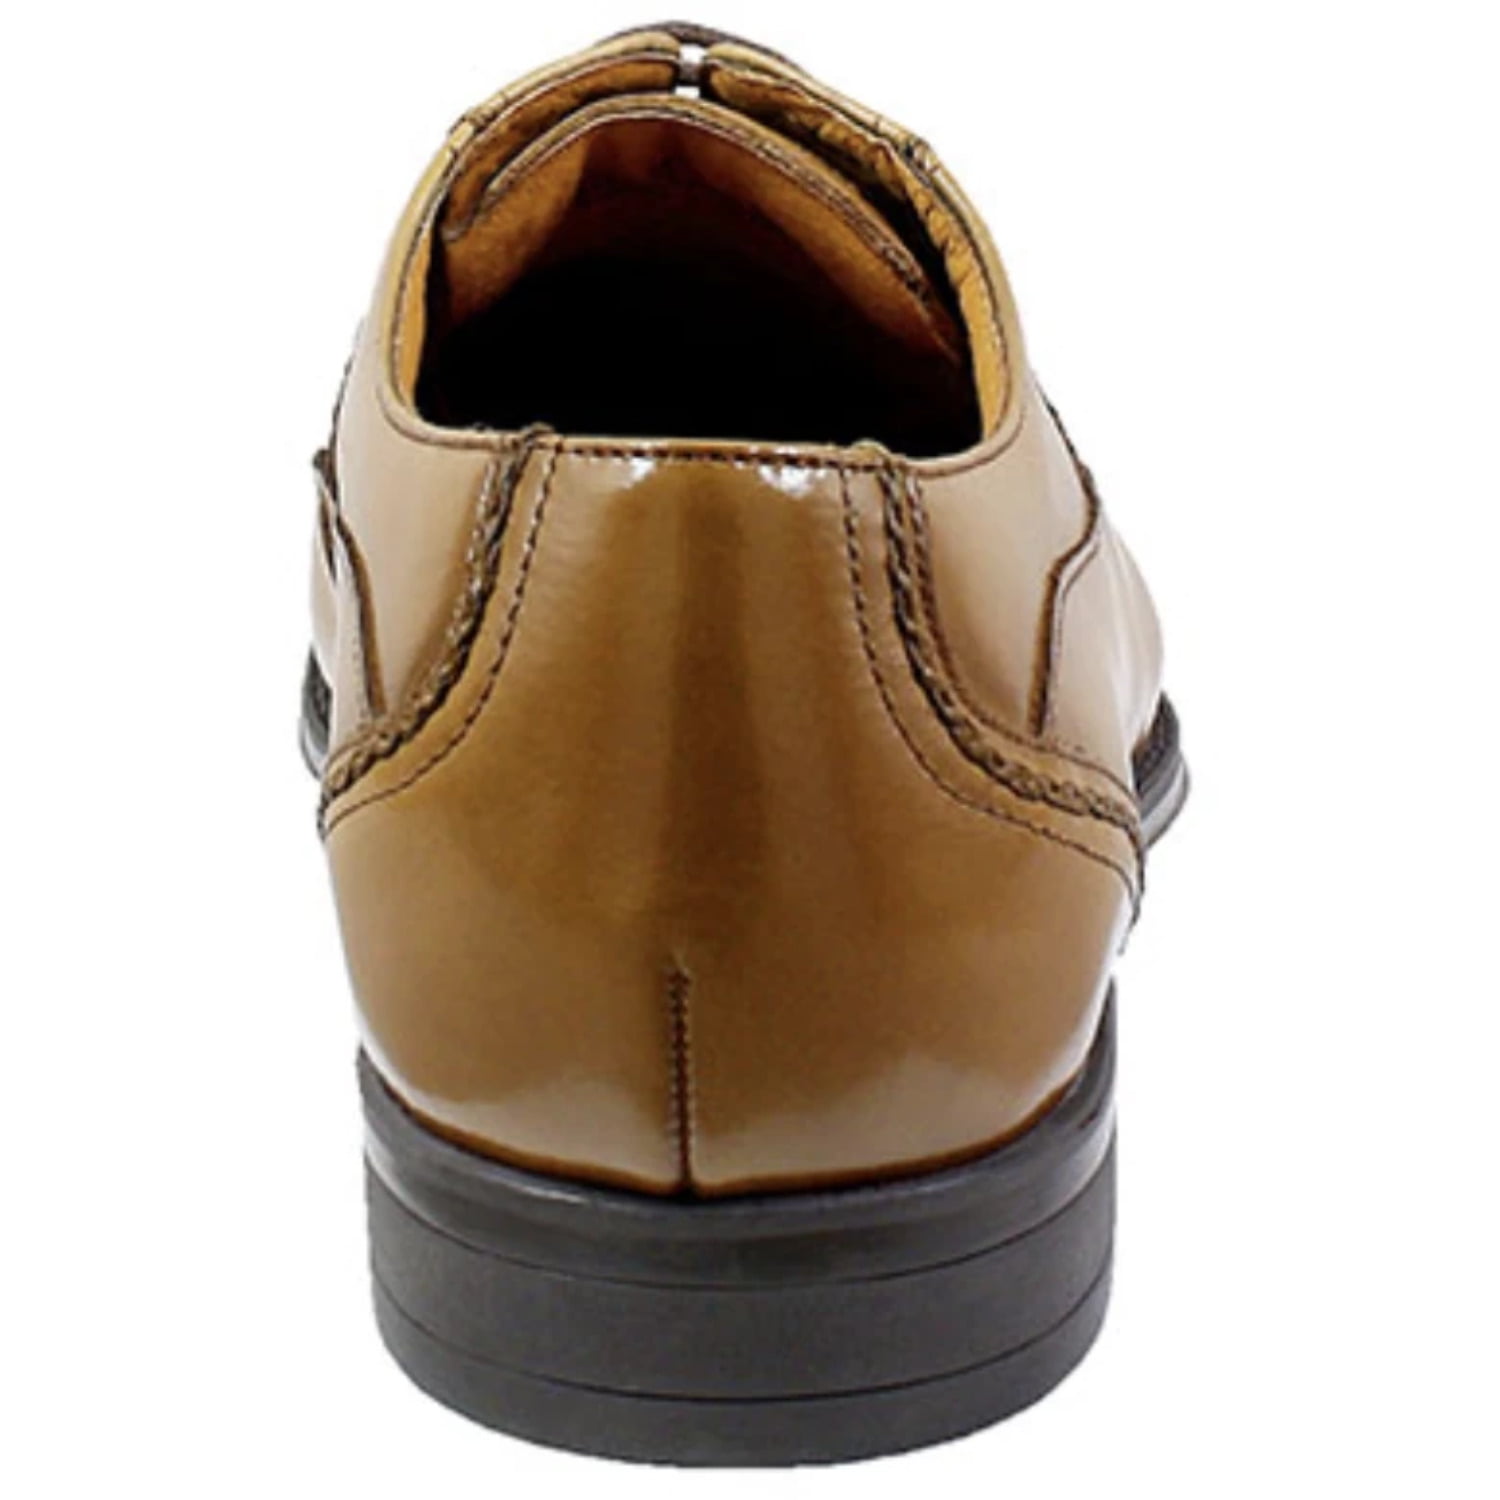 Stacy Adams Men's Powell Oxfords Tan Leather Cap Toe Dress Shoes 25246-240 